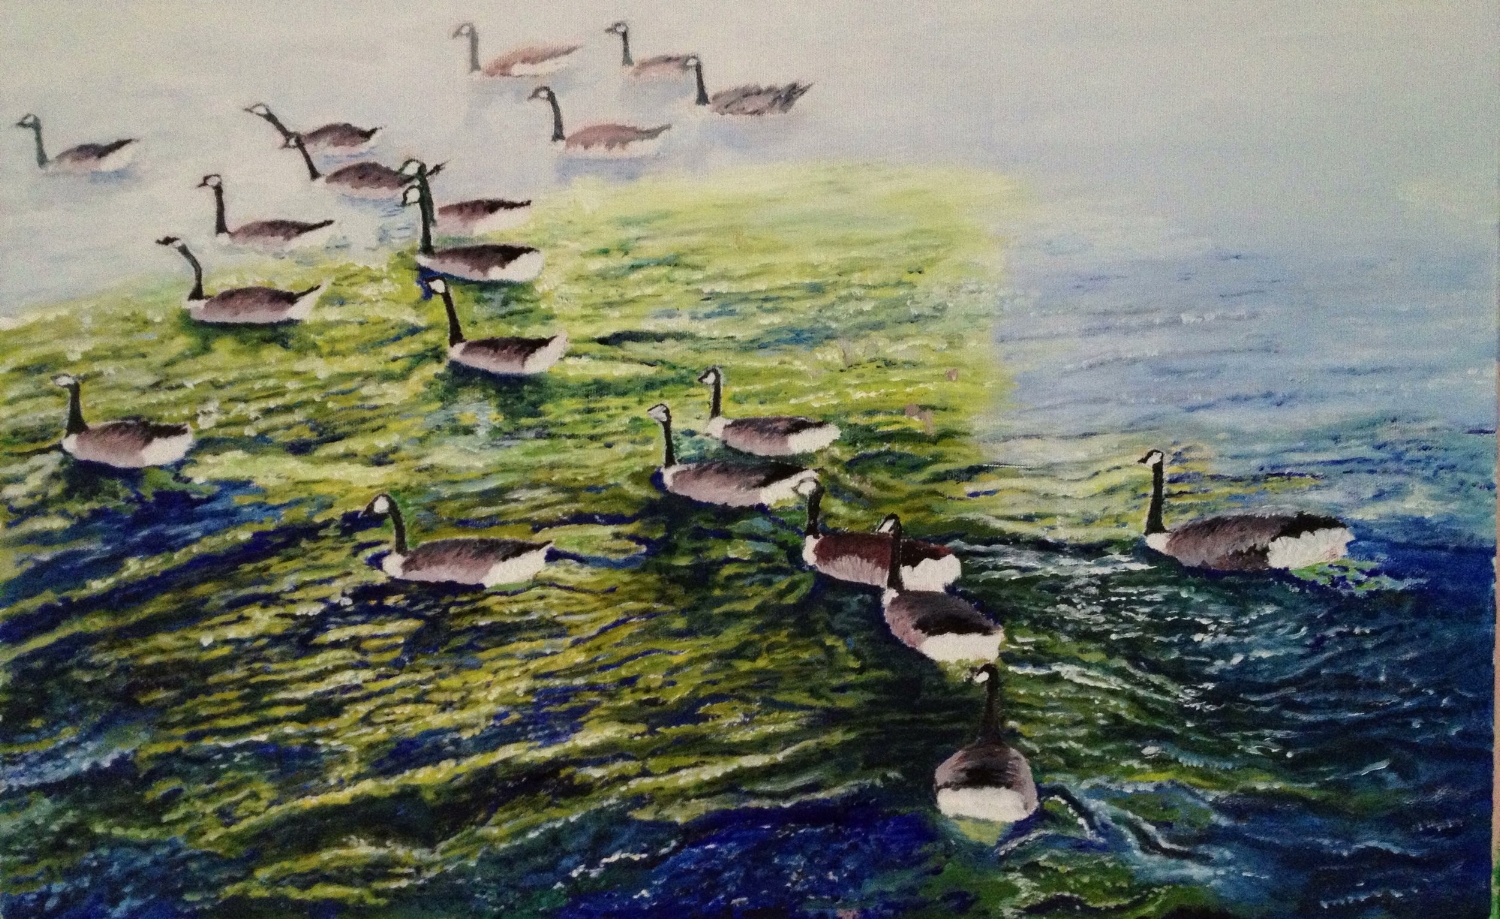 Swans on Avon River at Stratford